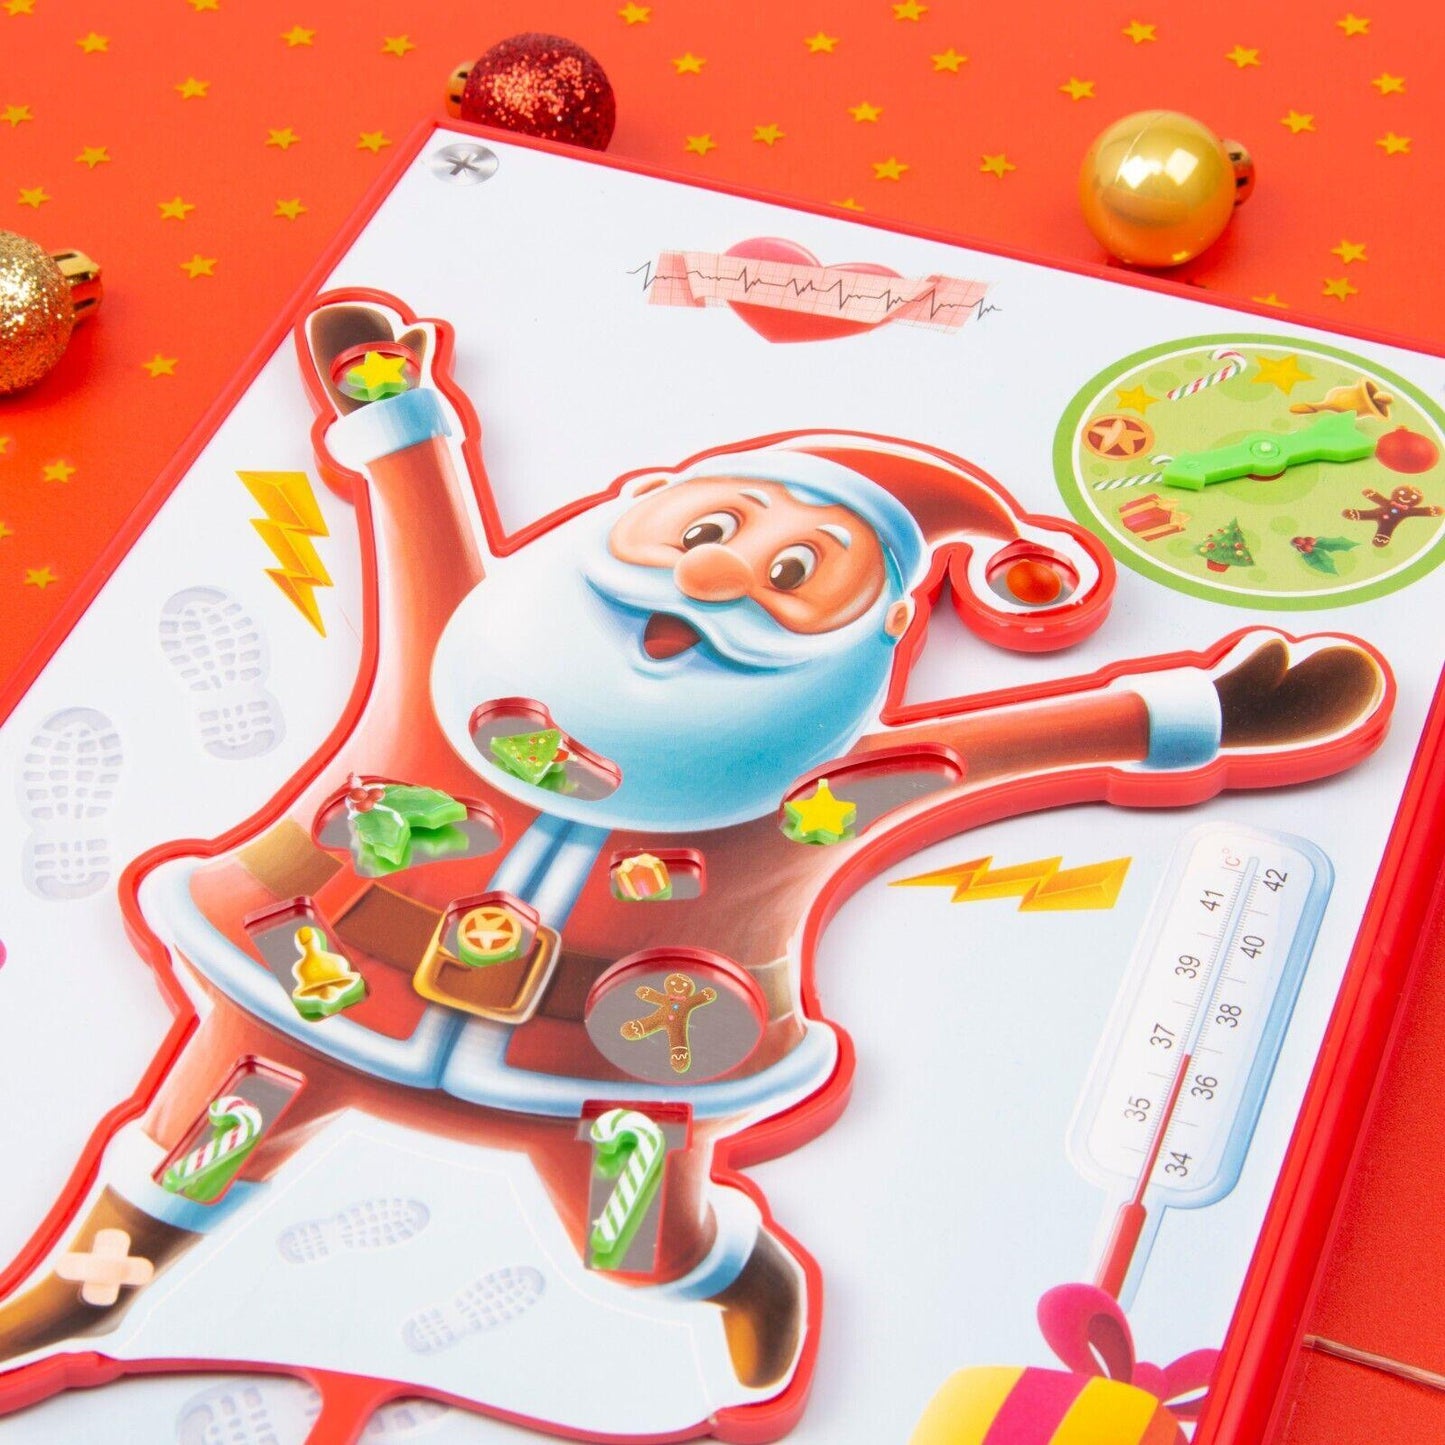 Santas Operation Festive Board Games for Kids Families